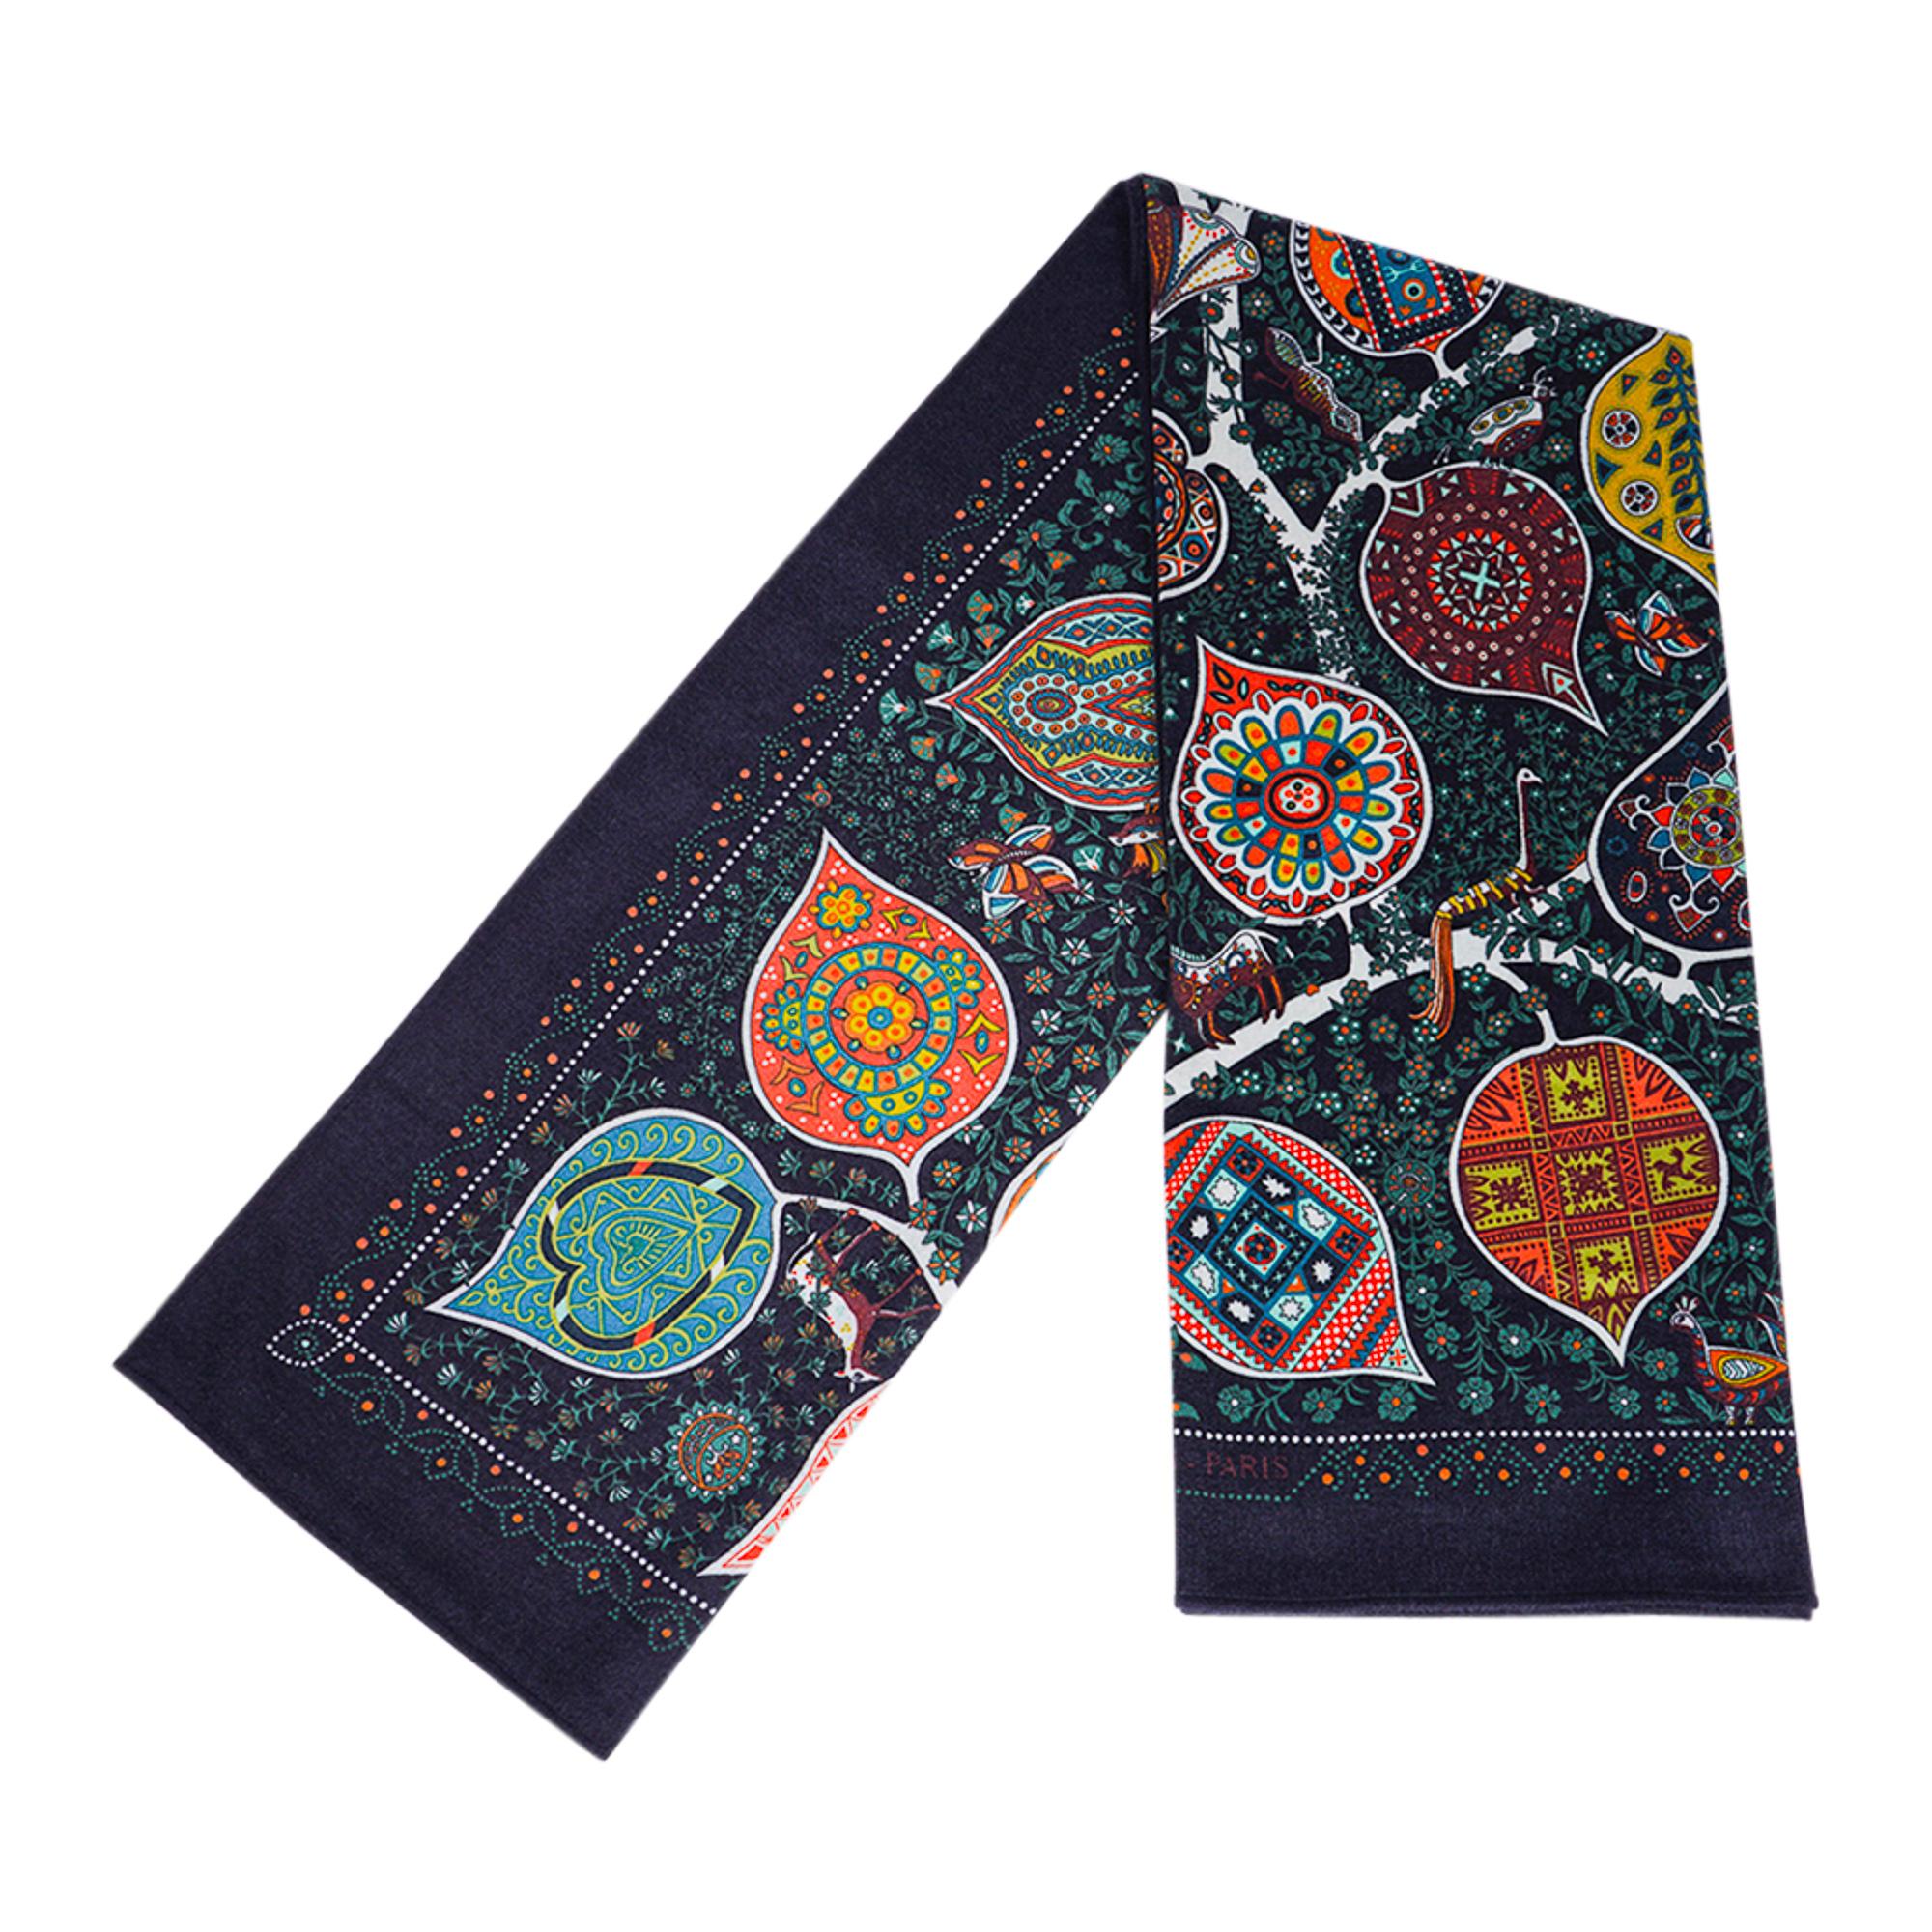 Hermes Blanket Tree of Life Blanket Multicolored Cashmere / Silk New 9